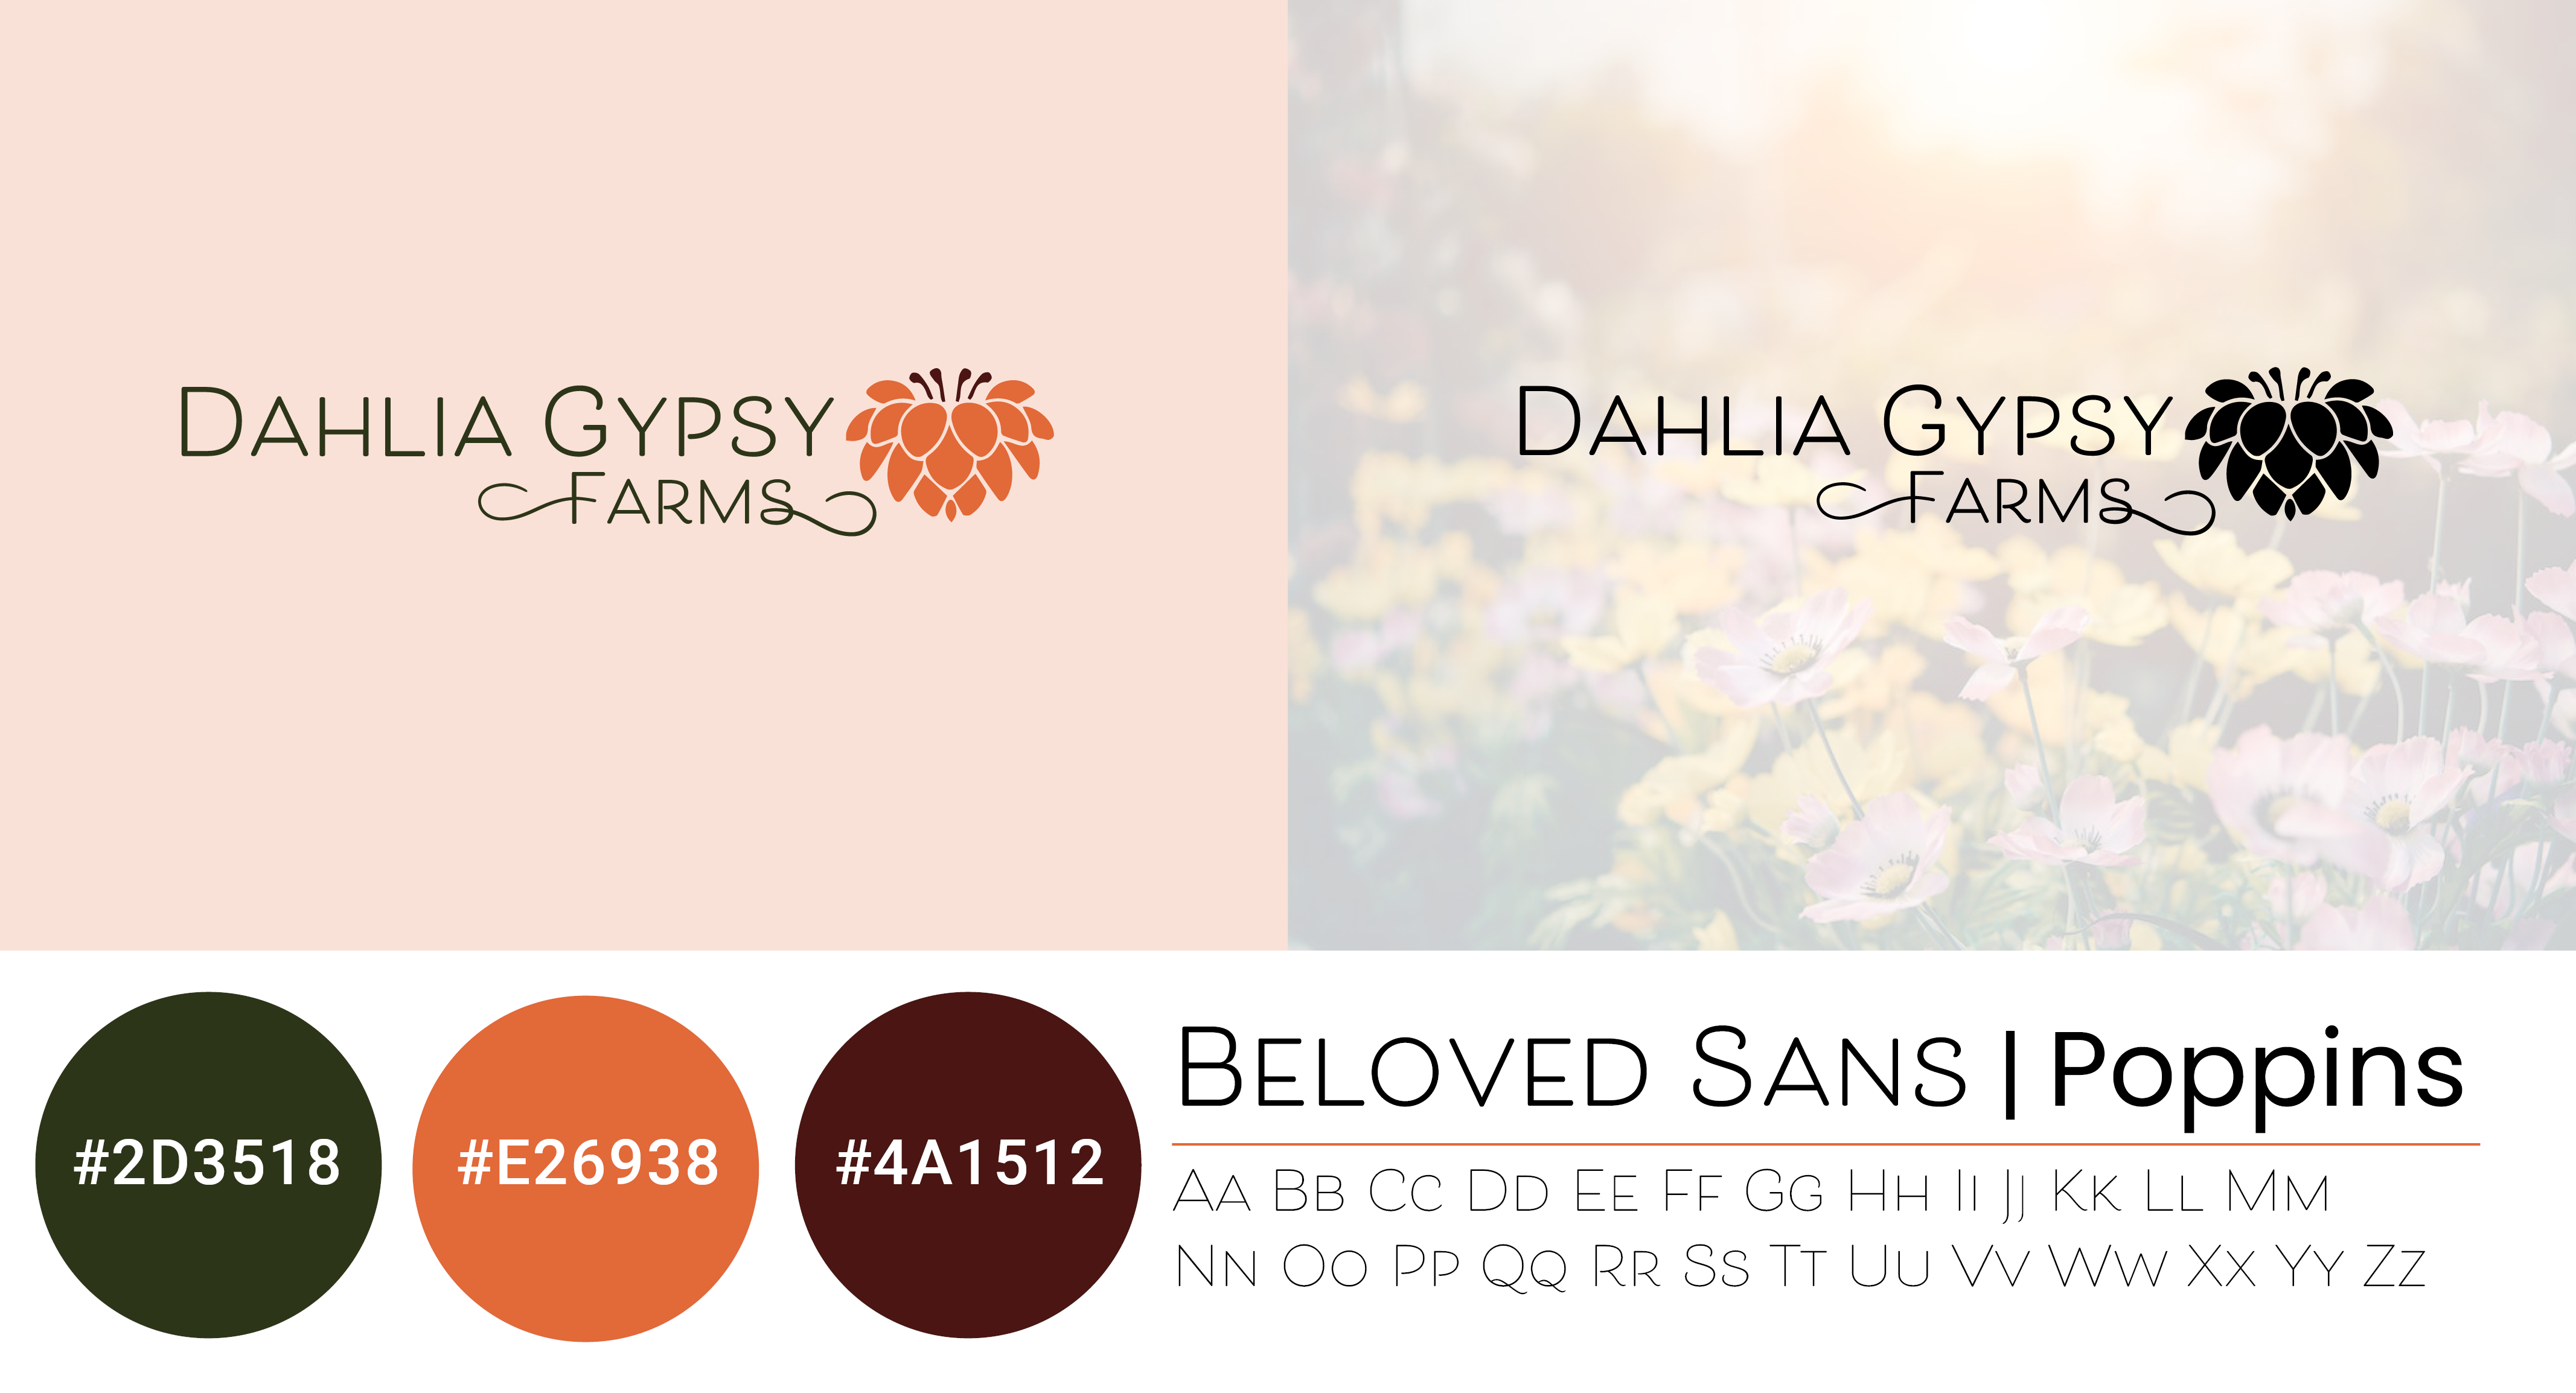 Branding for Dahlia Gypsy Farms.